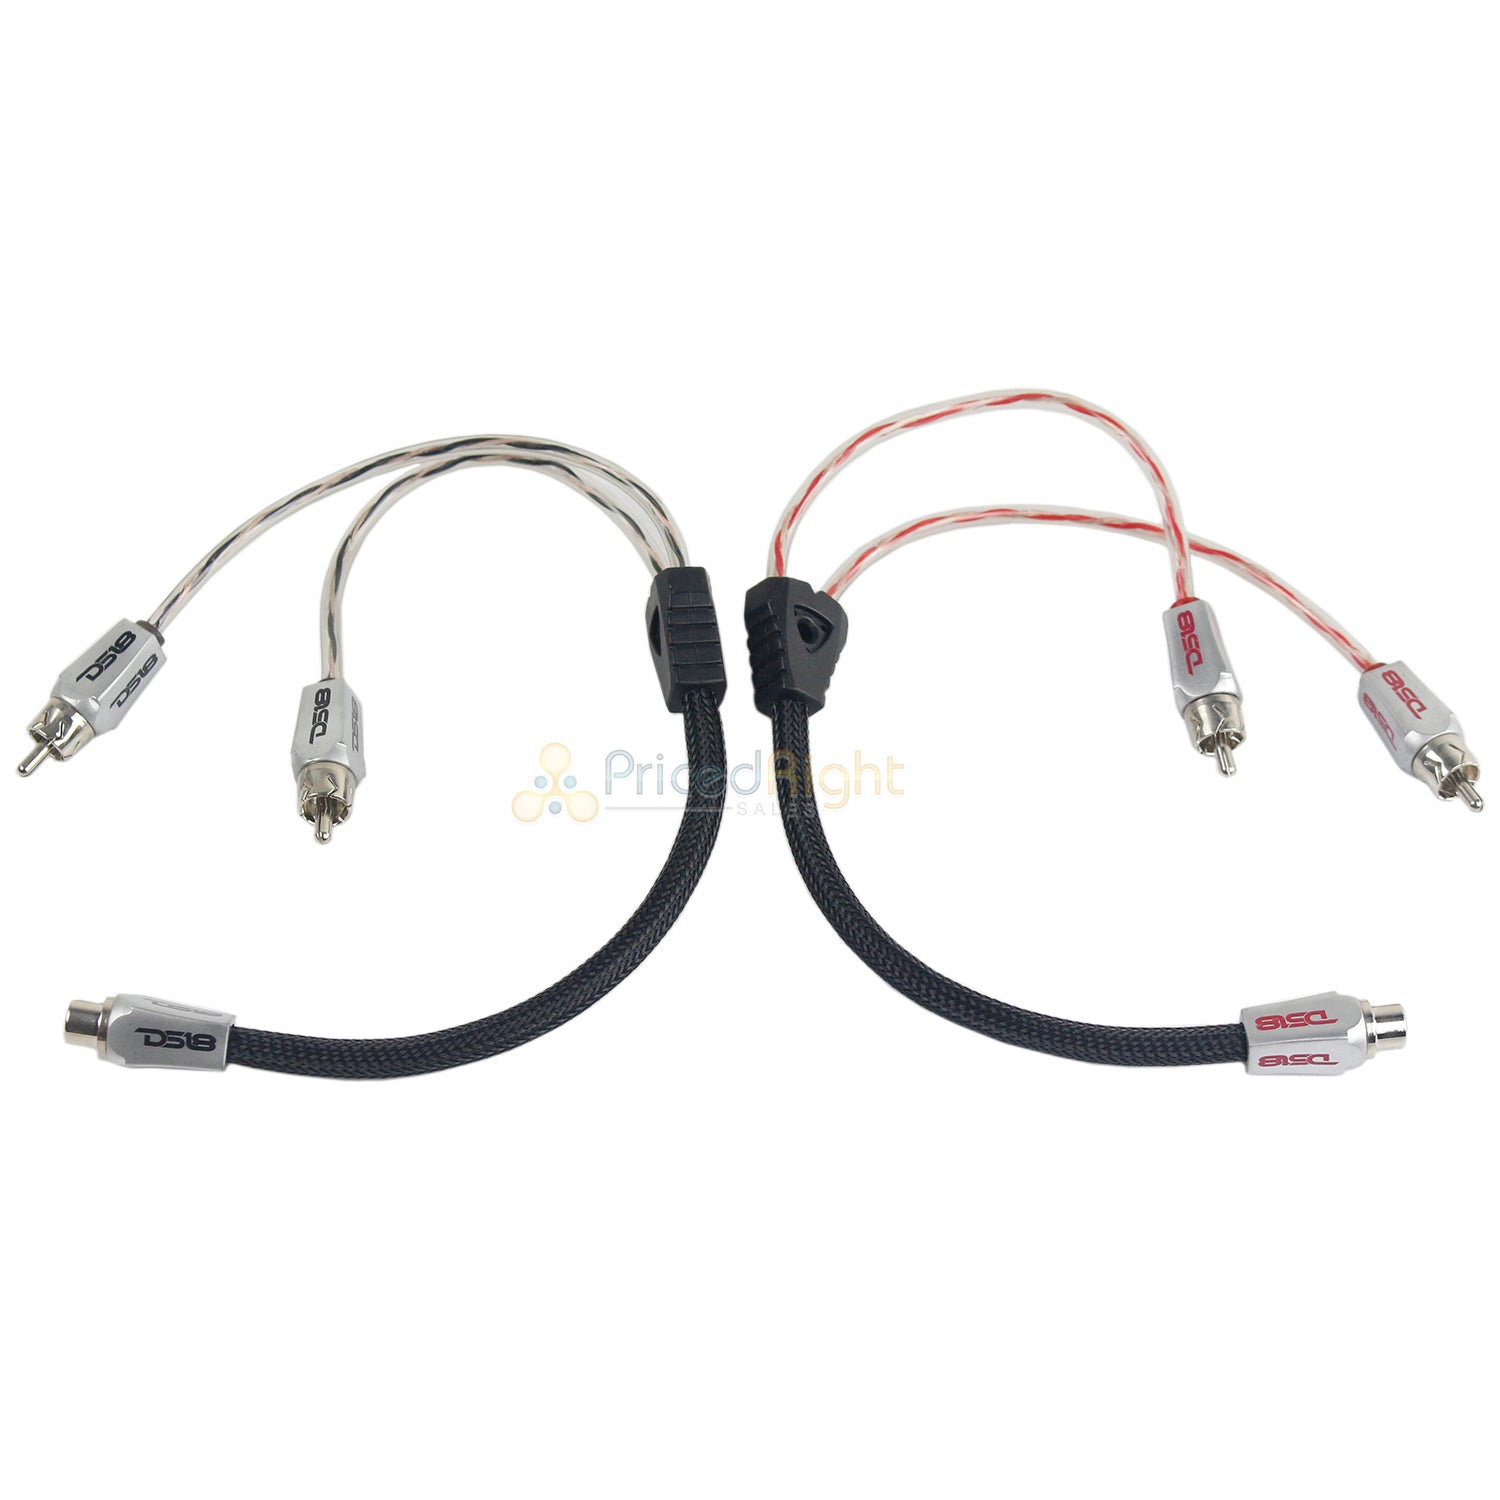 DS18 1F2M Dual Twist RCA Splitter 1 Female 2 Male Audio Adaptor Cables HQRCA